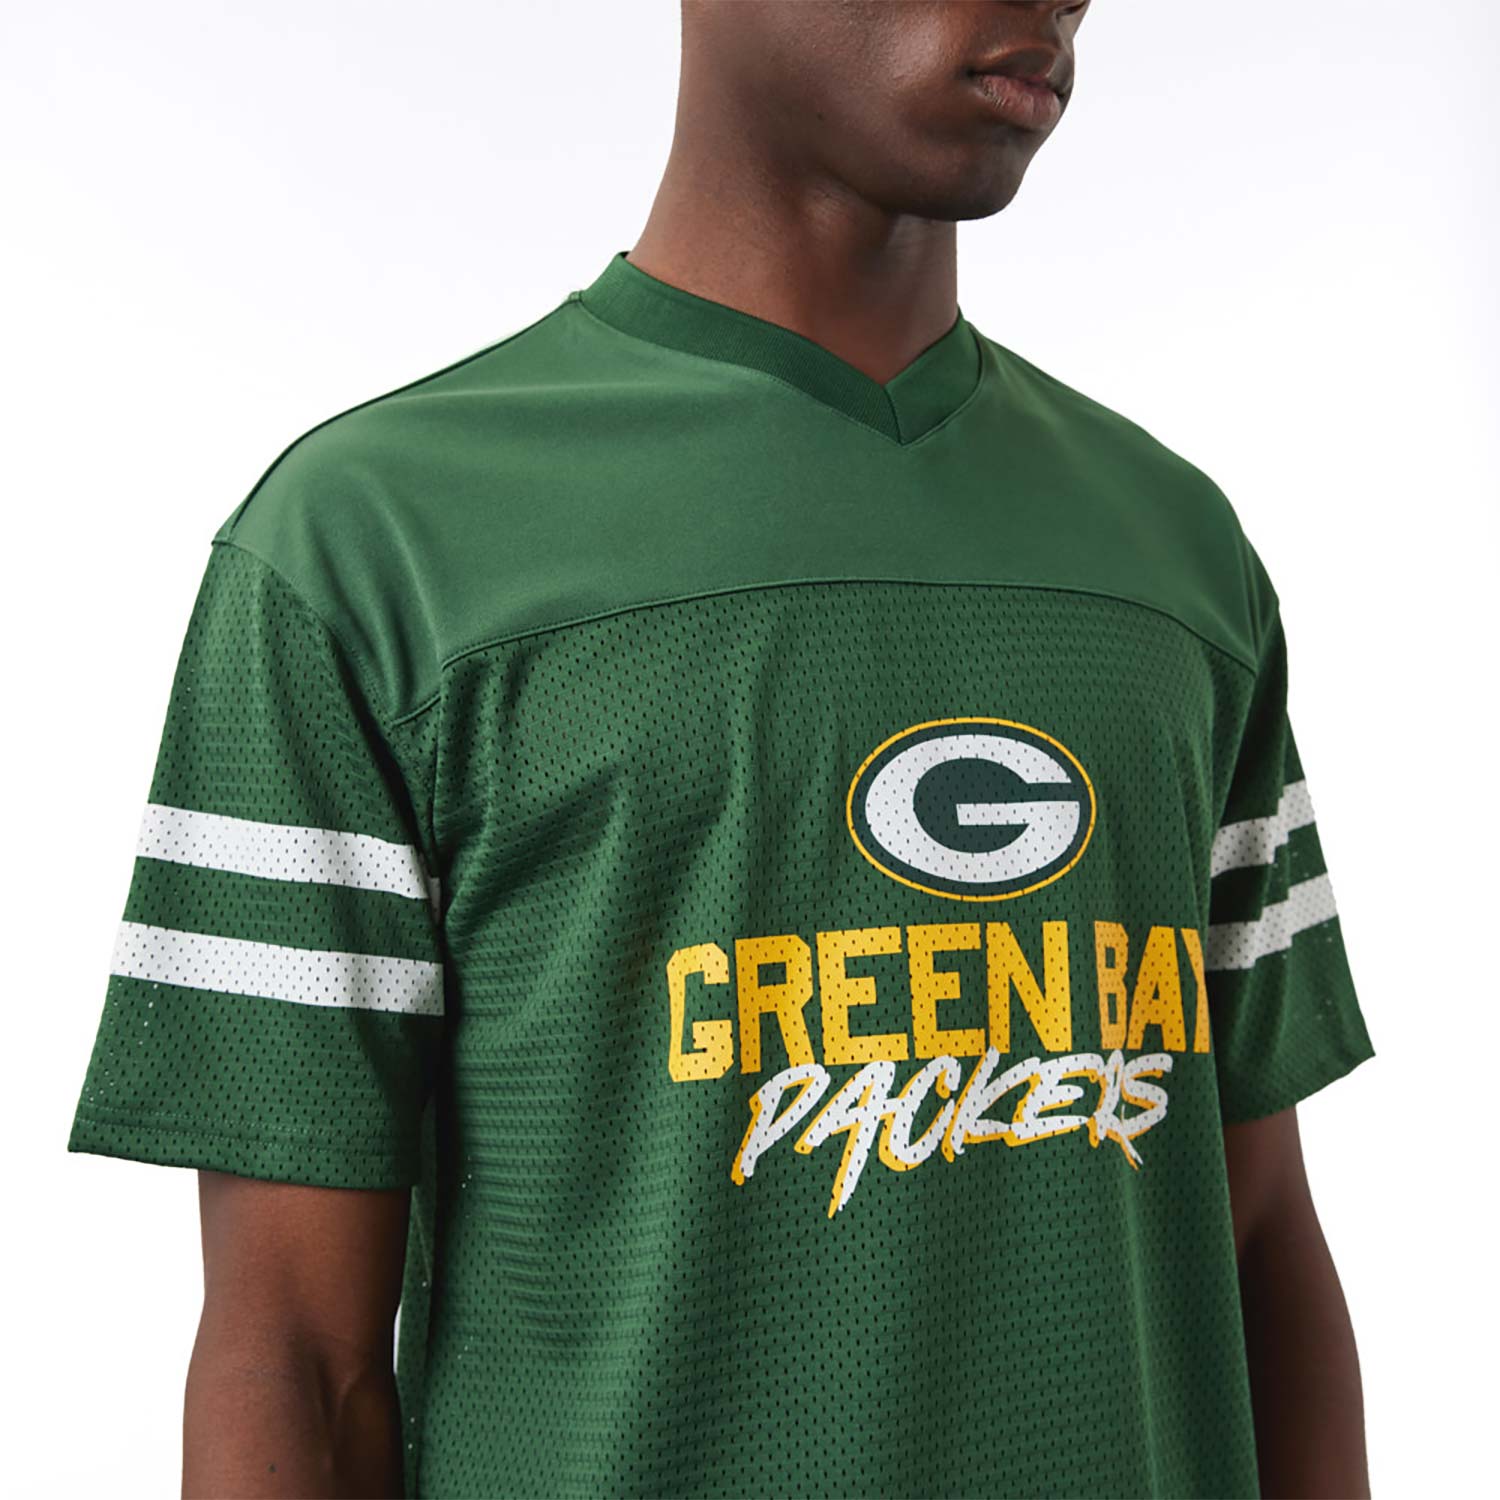 Green Bay Packers NFL Script Green Jersey